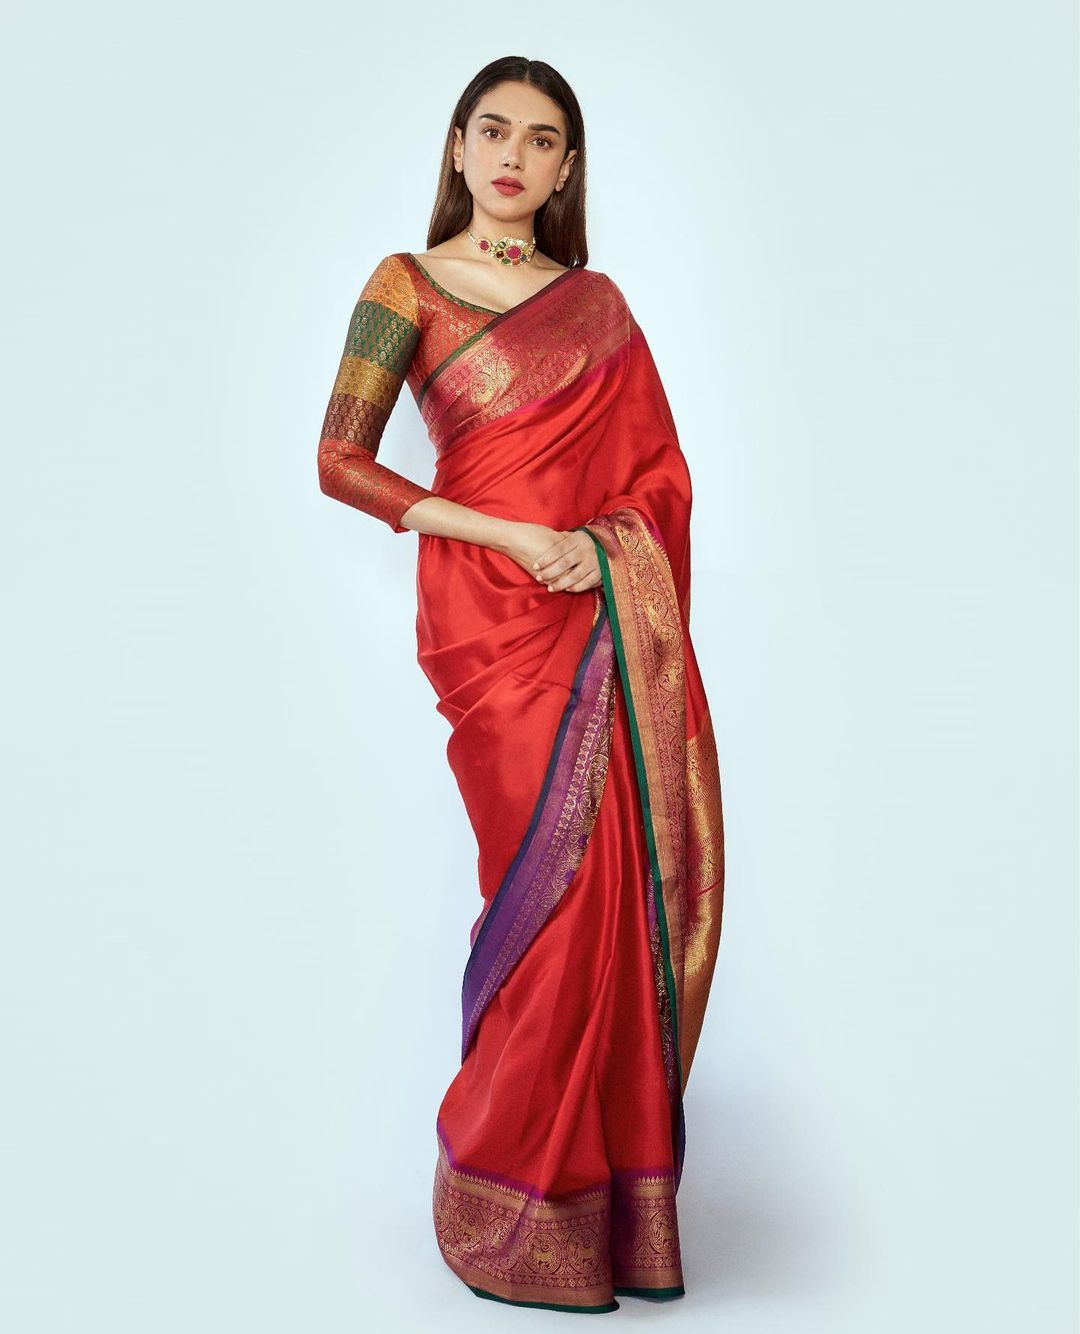 Aditi Rao Hydari is a picture of elegance in the scarlet-coloured silk saree